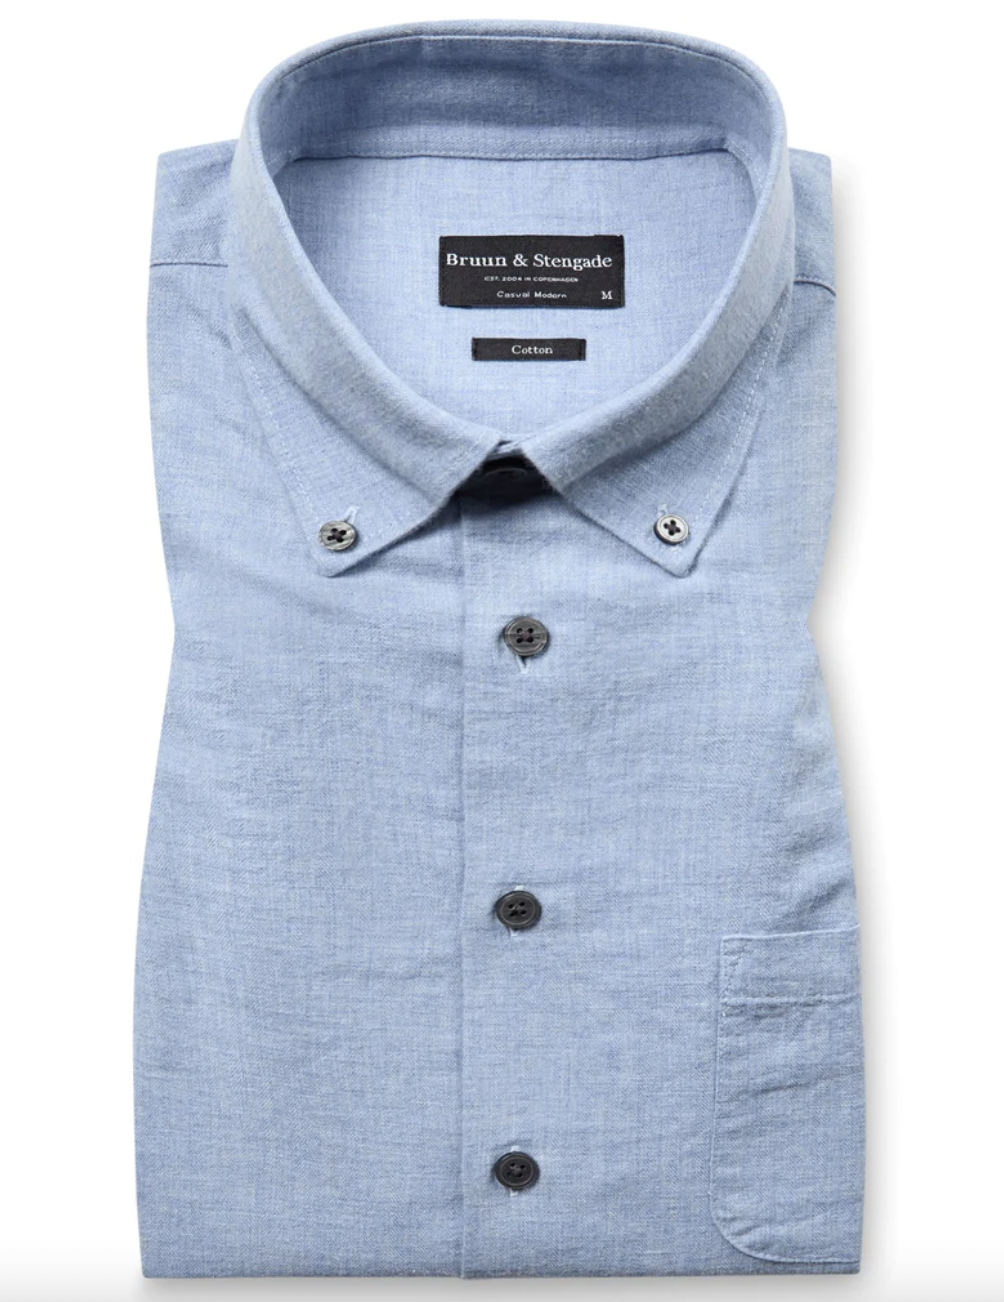 Bruun & Stengade Skjorte Cotton Lyseblå flatpakket med tre knapper synlig